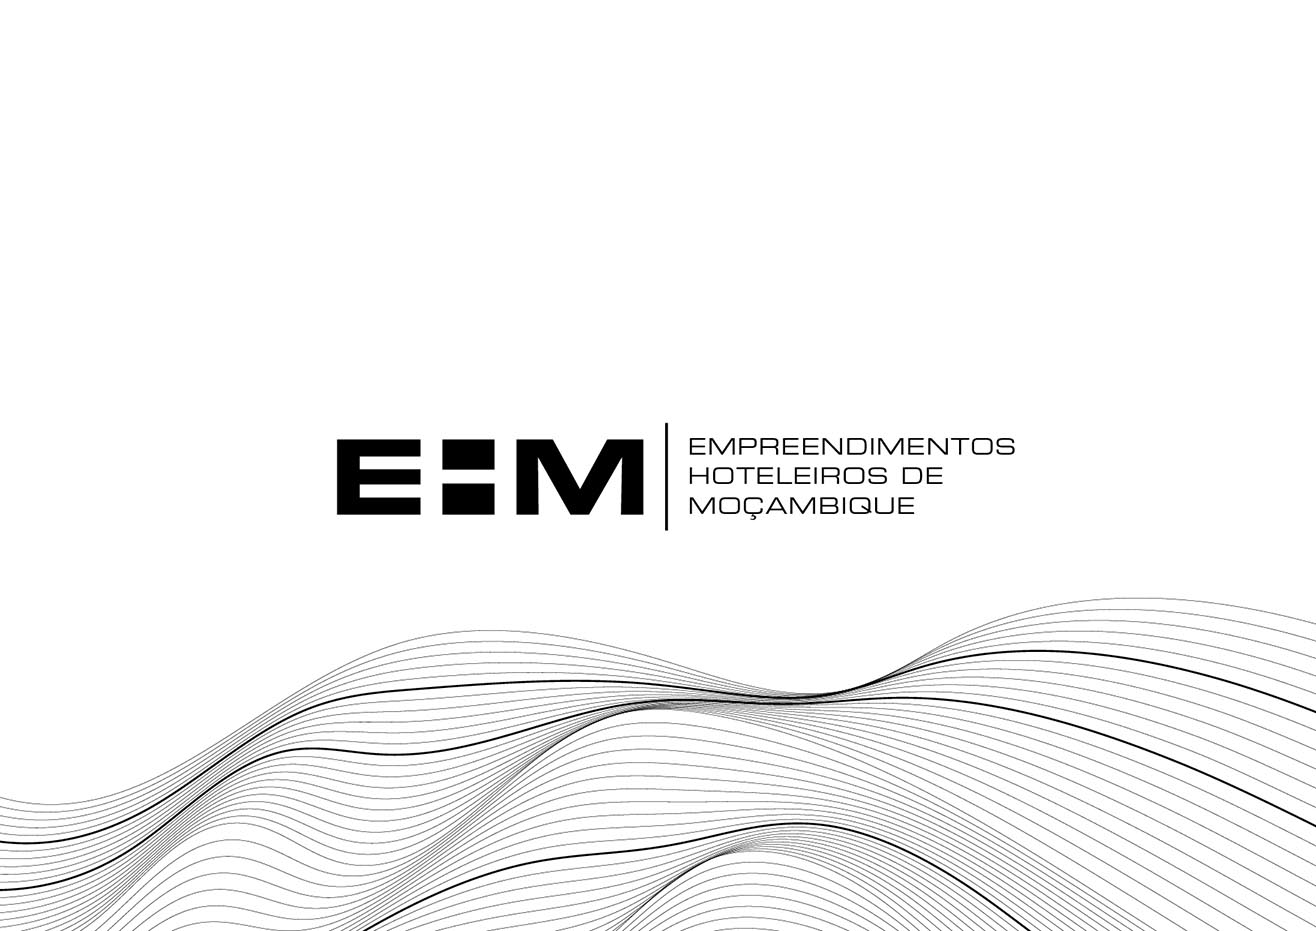 EHM Corporate identity